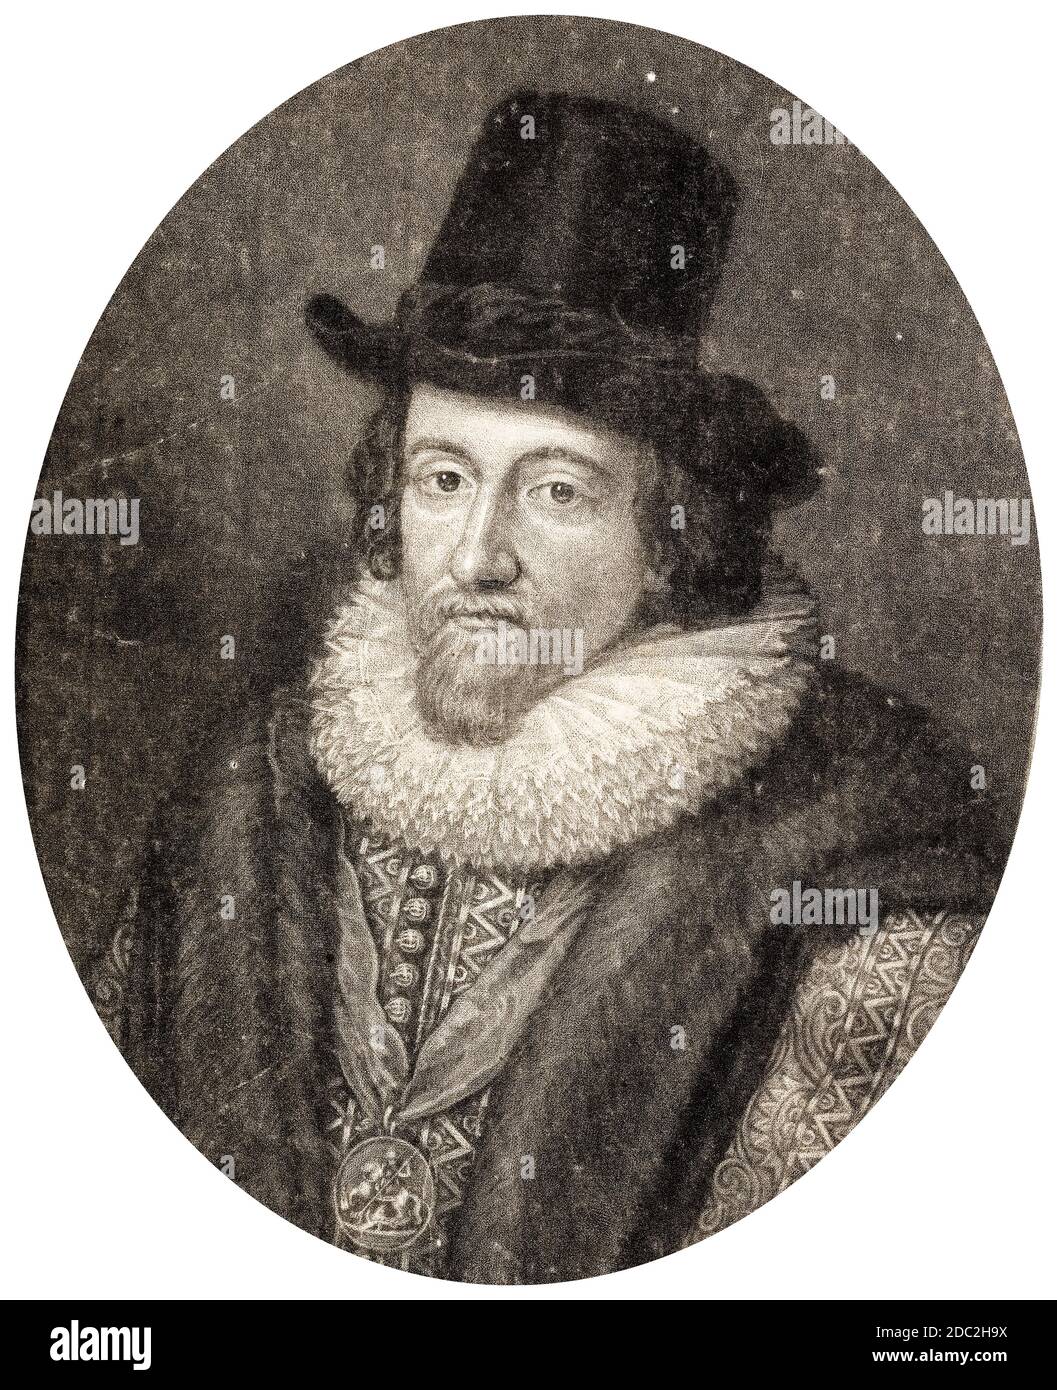 Sir Francis Bacon (1561-1626), 1st Visconte St Albans, filosofo e statista inglese, stampa mezzotinta ritratto, non datata Foto Stock